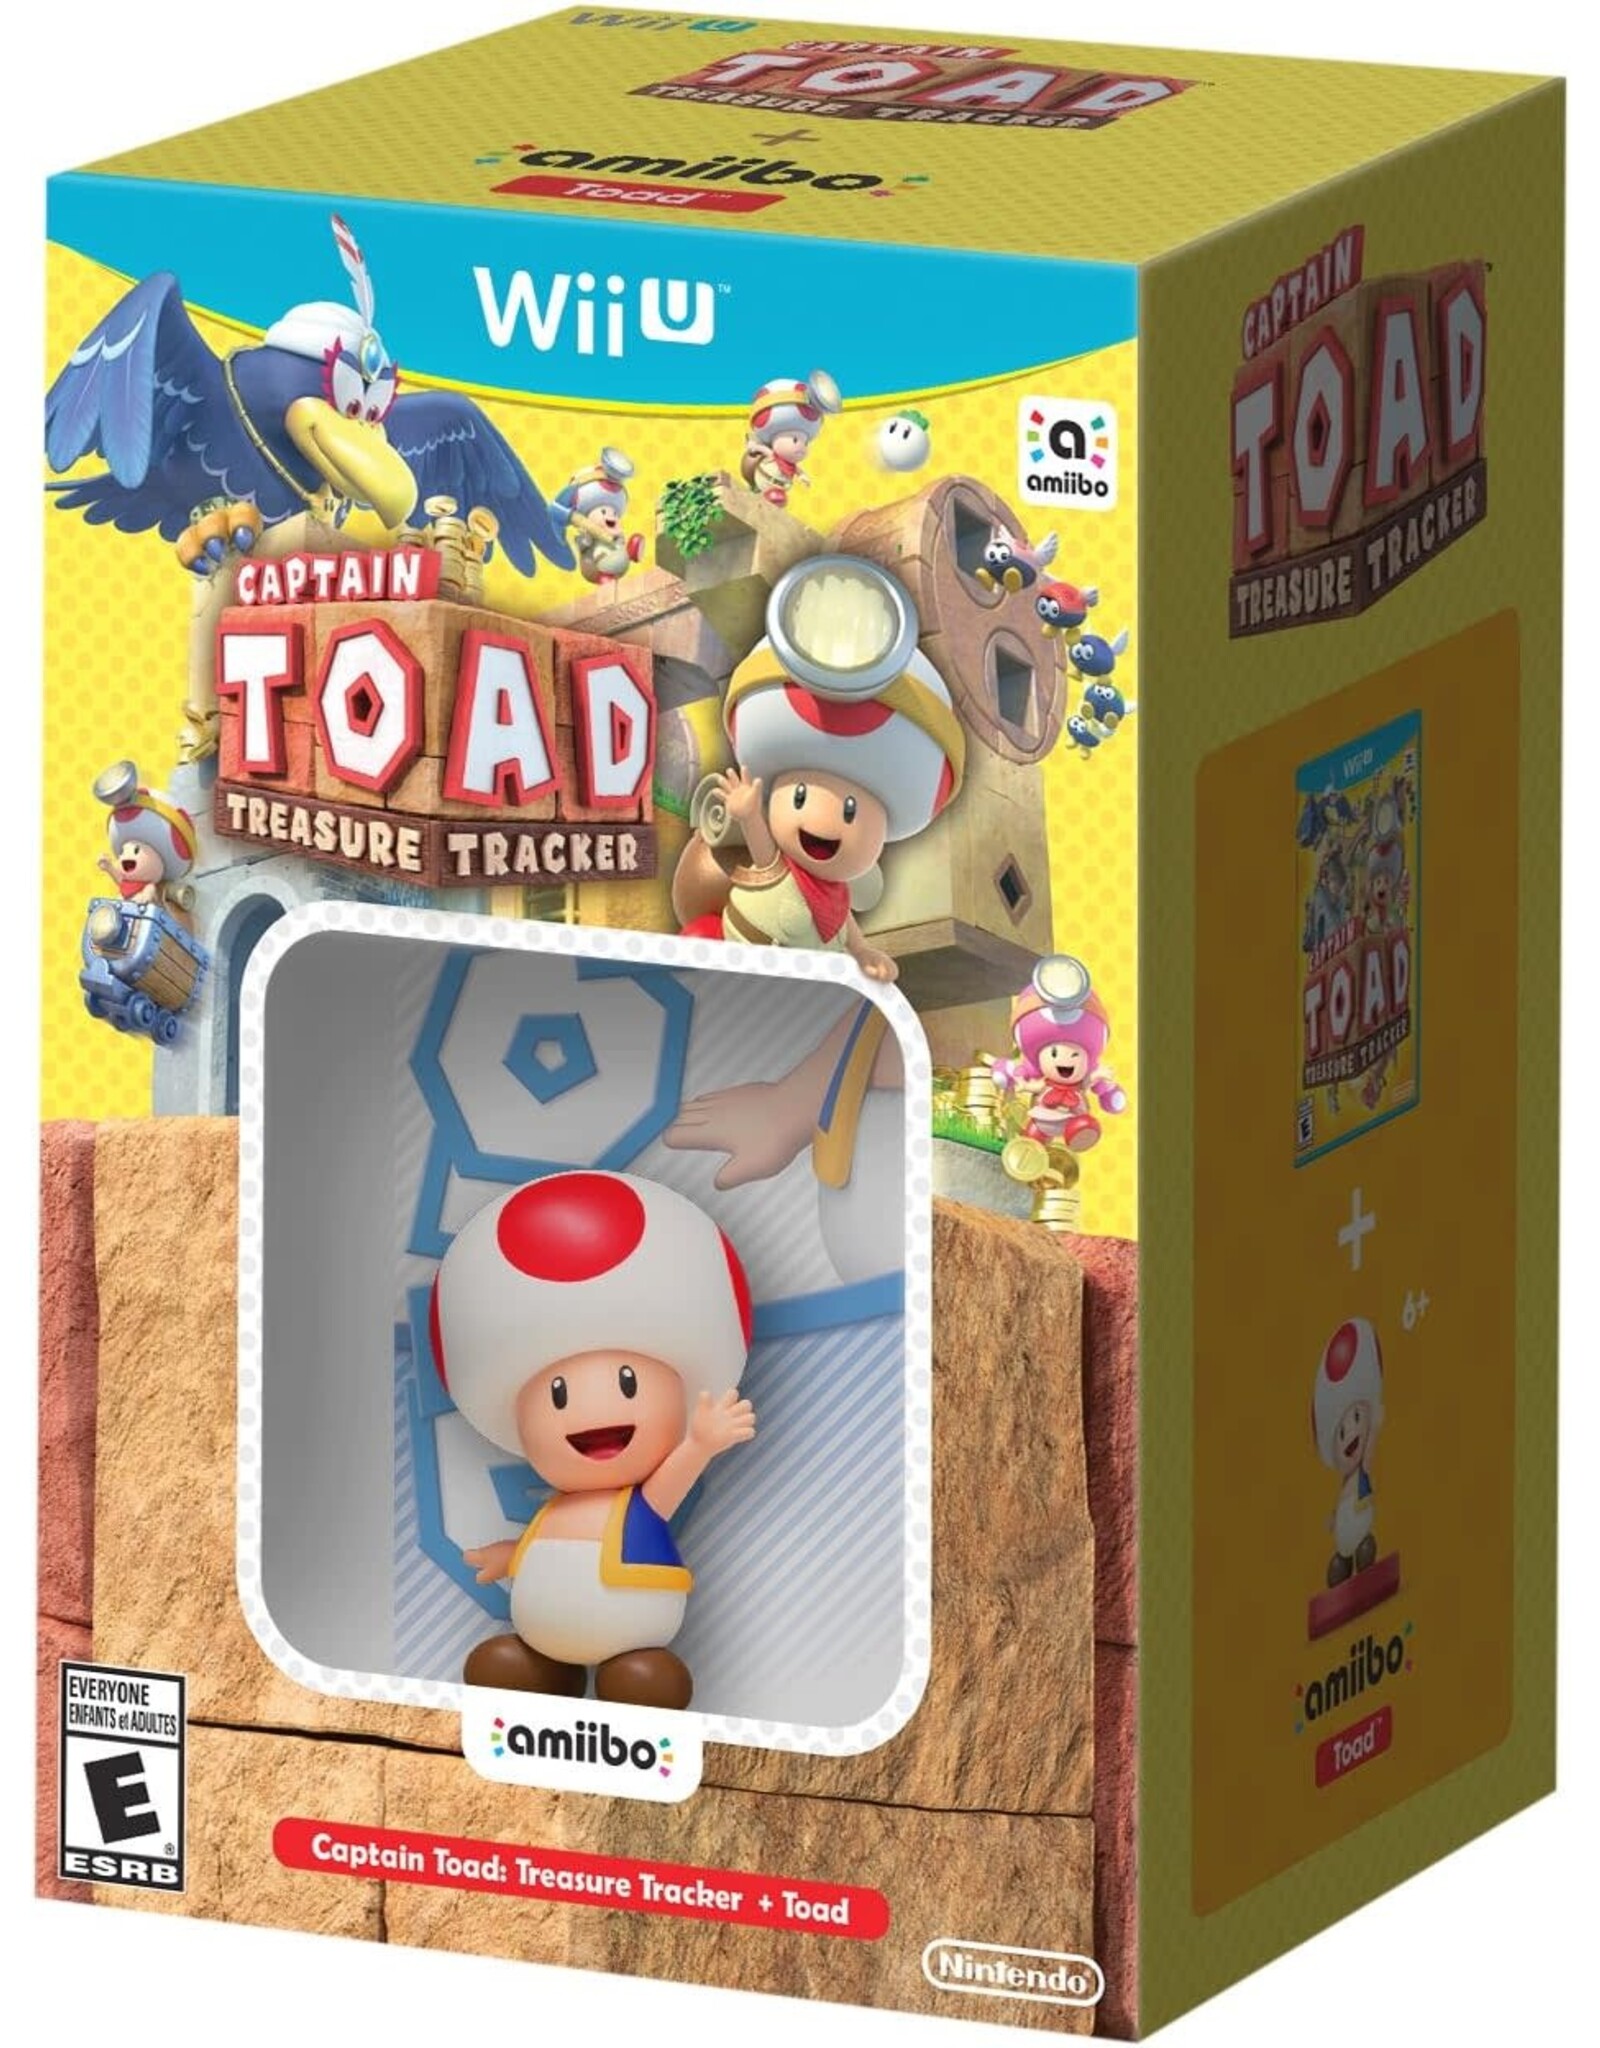 Wii U Captain Toad: Treasure Tracker Amiibo Bundle (New in Open Box)